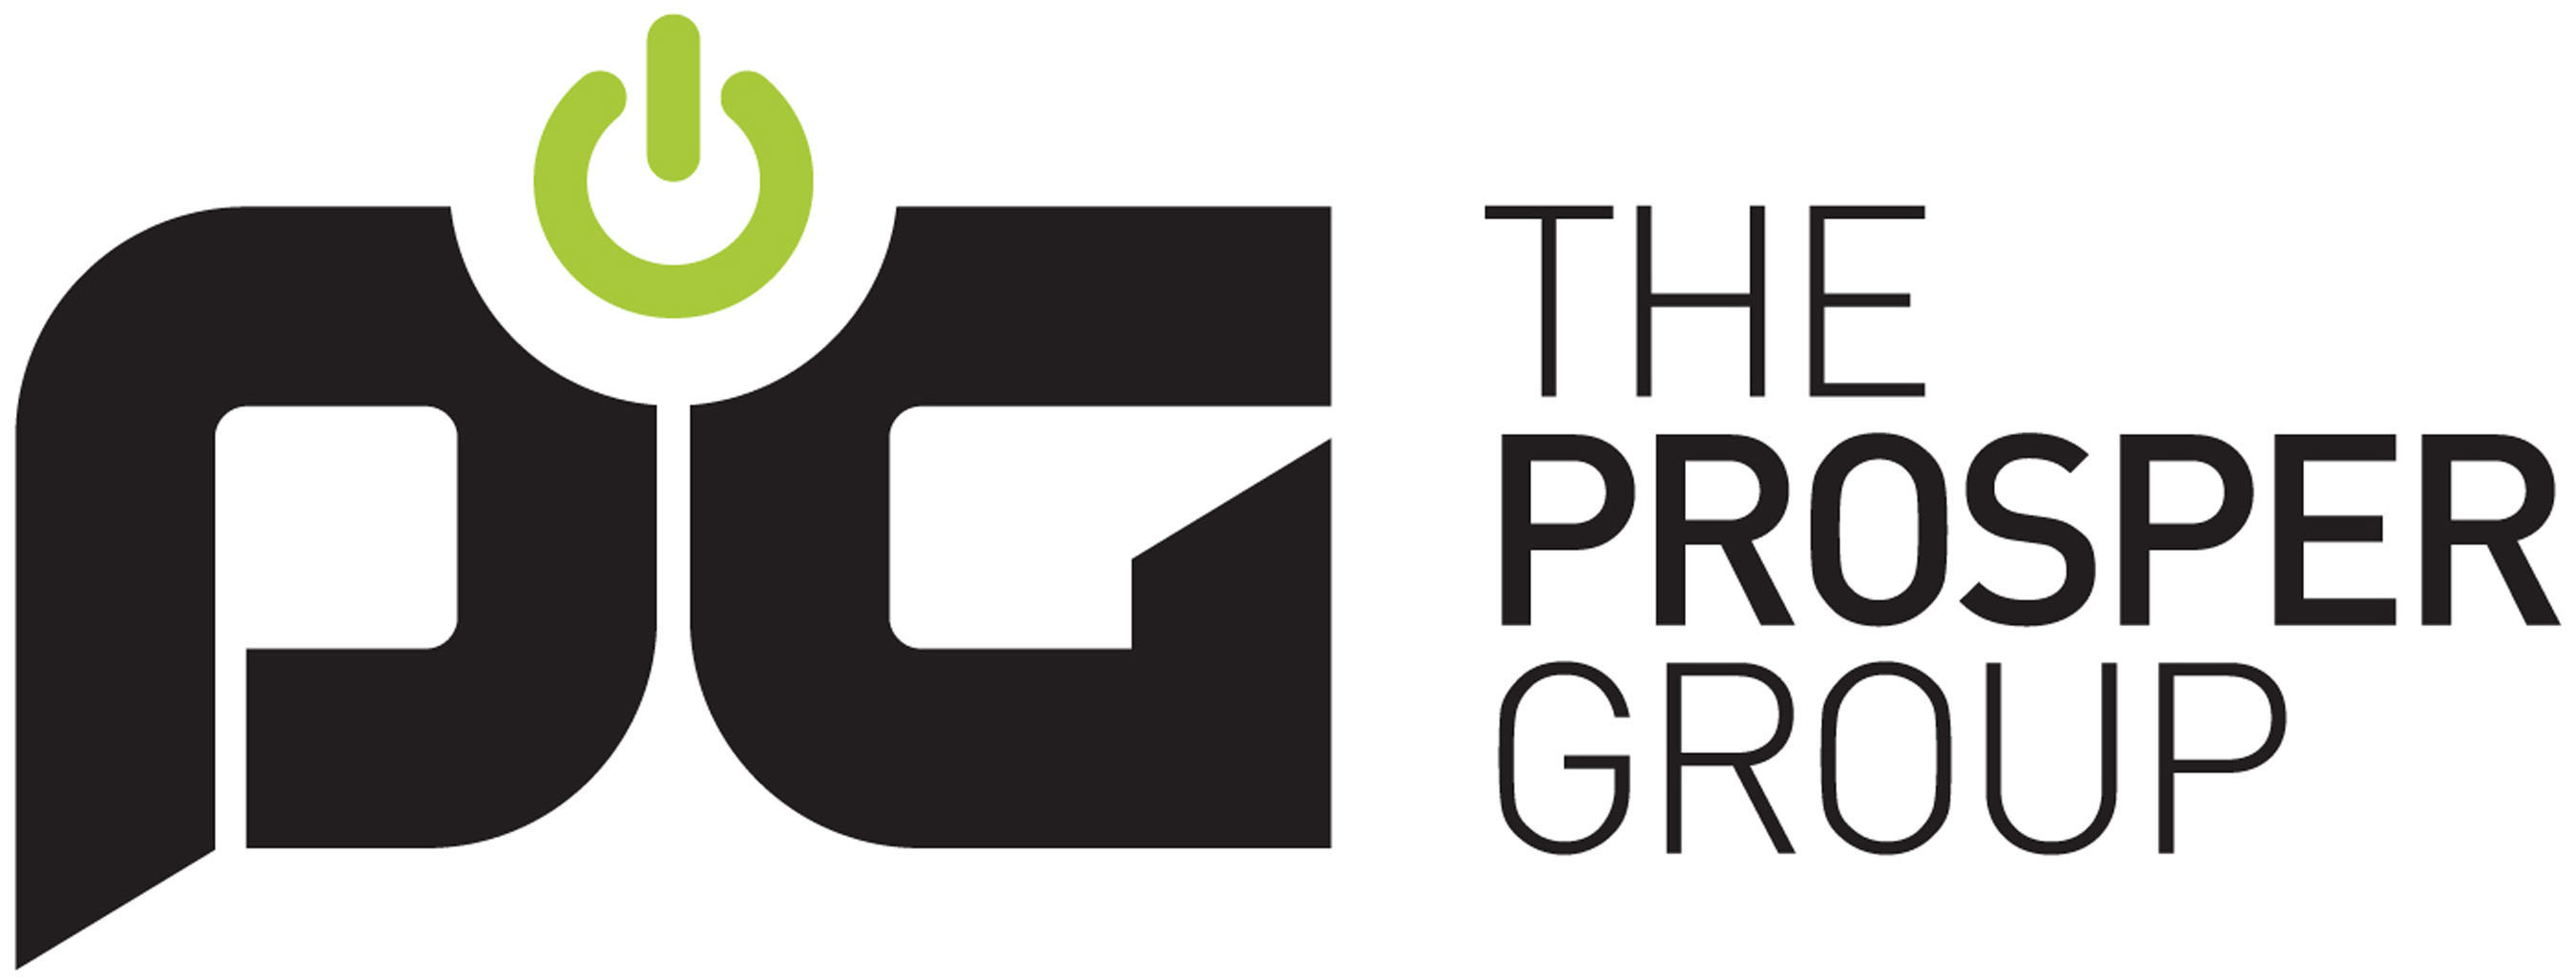 The Prosper Group Logo. (PRNewsFoto/The Prosper Group)